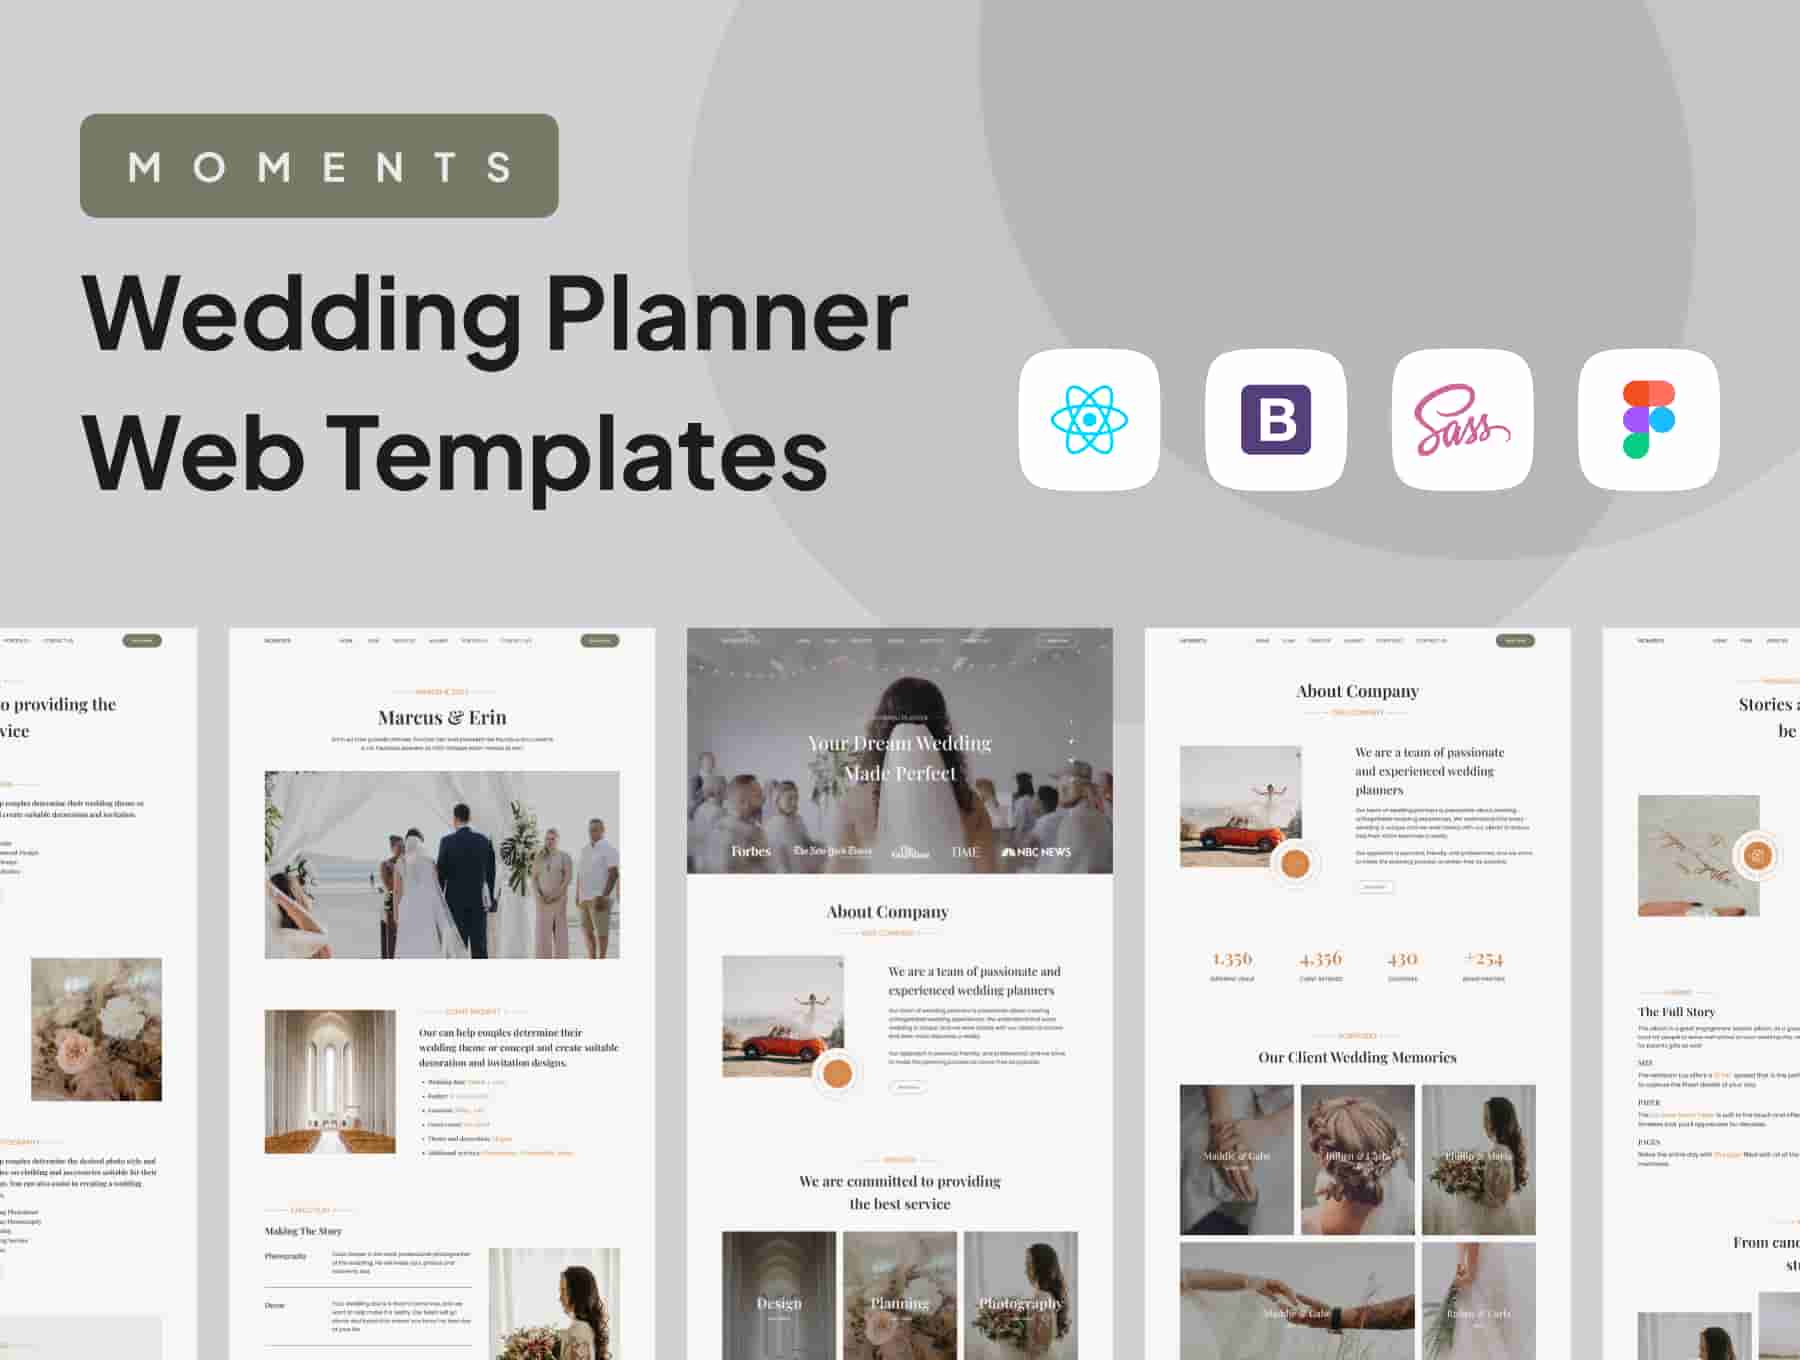 Moments - Wedding Planner Web Templates